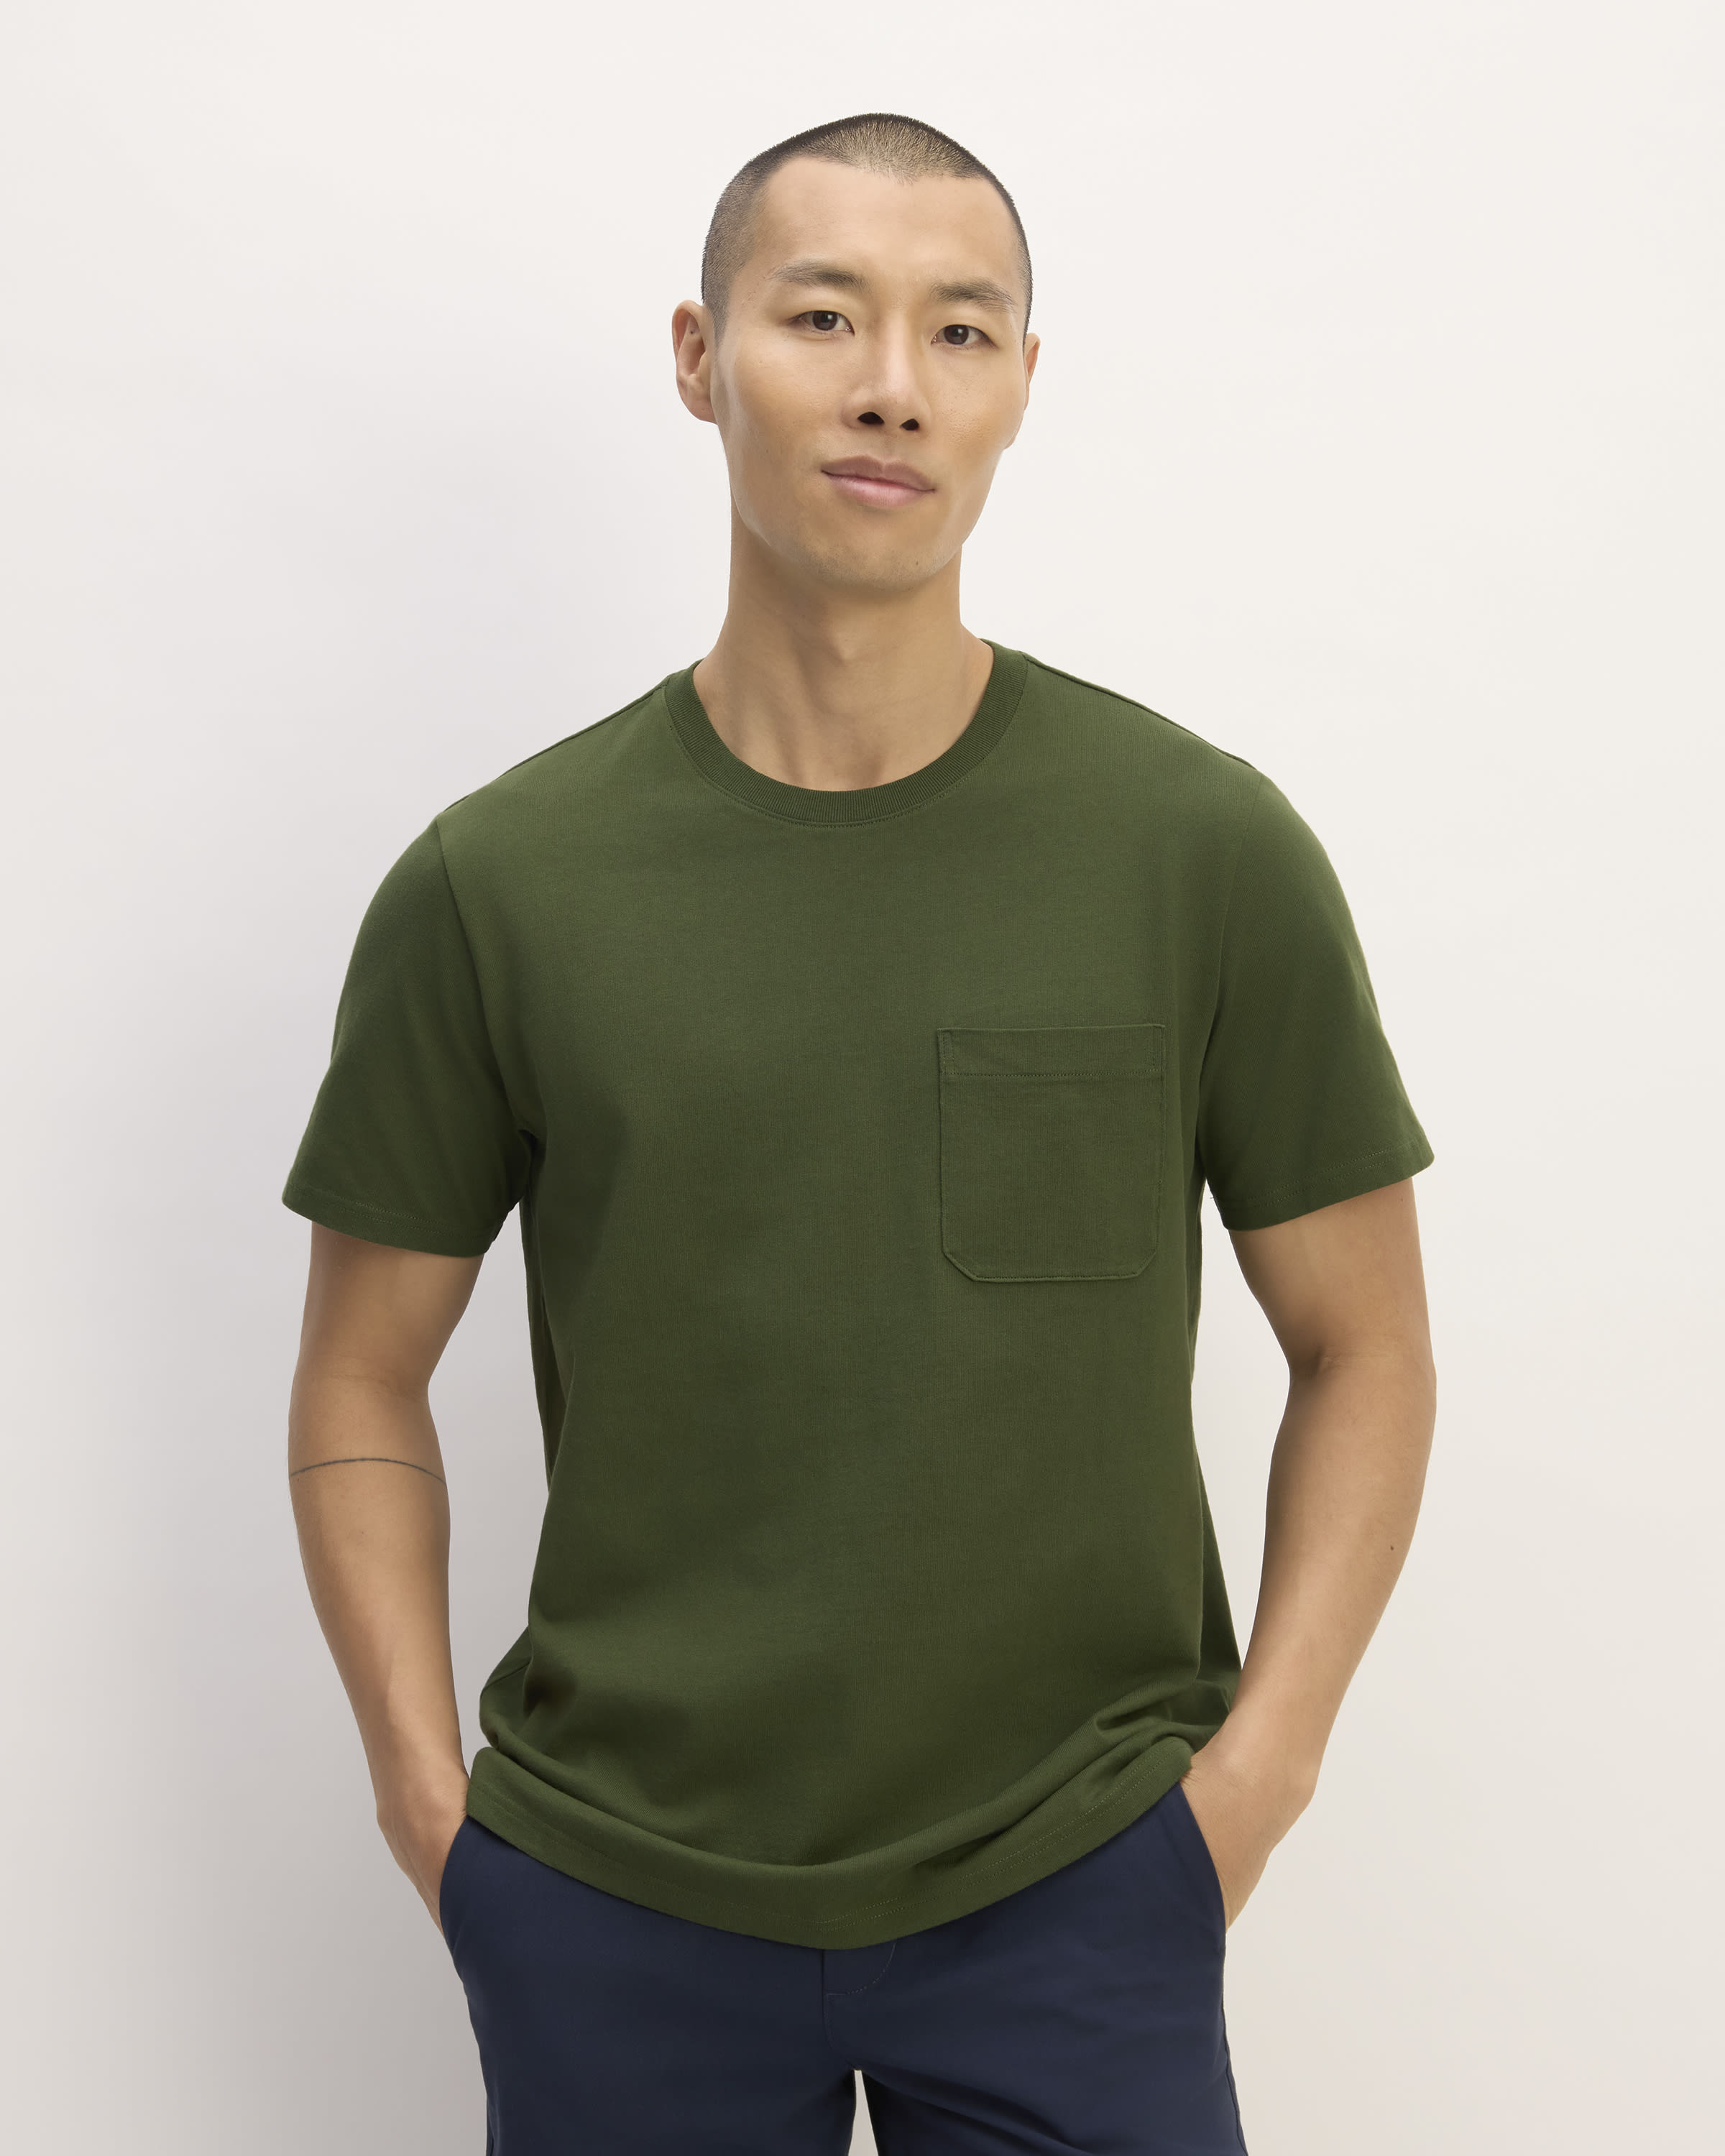 Men's Premium Pocket T-Shirt